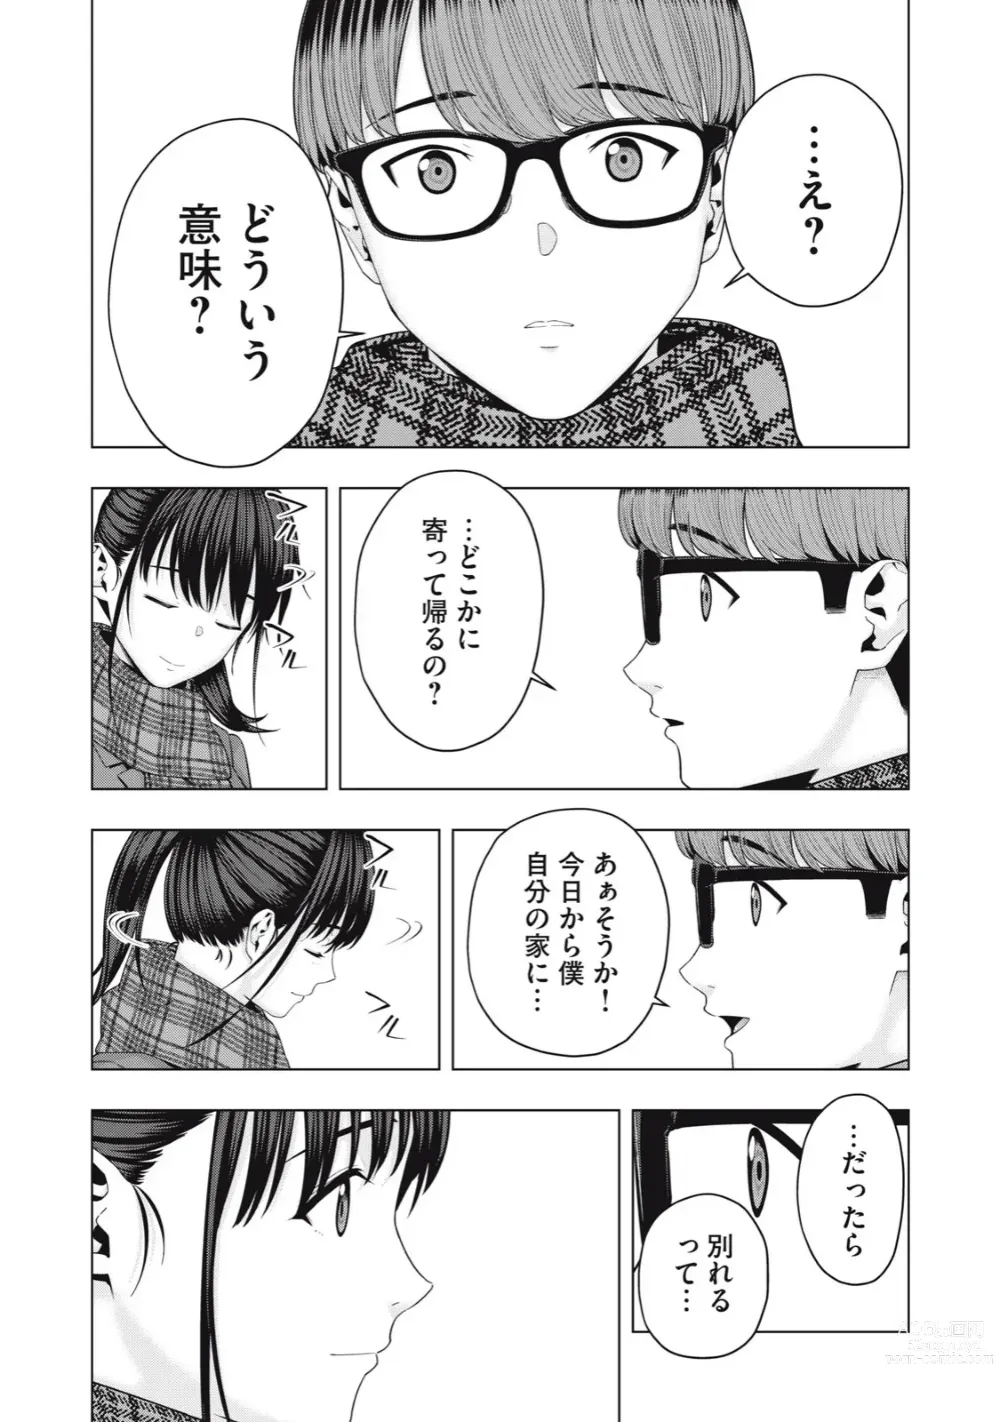 Page 577 of manga Kanojo no Tomodachi